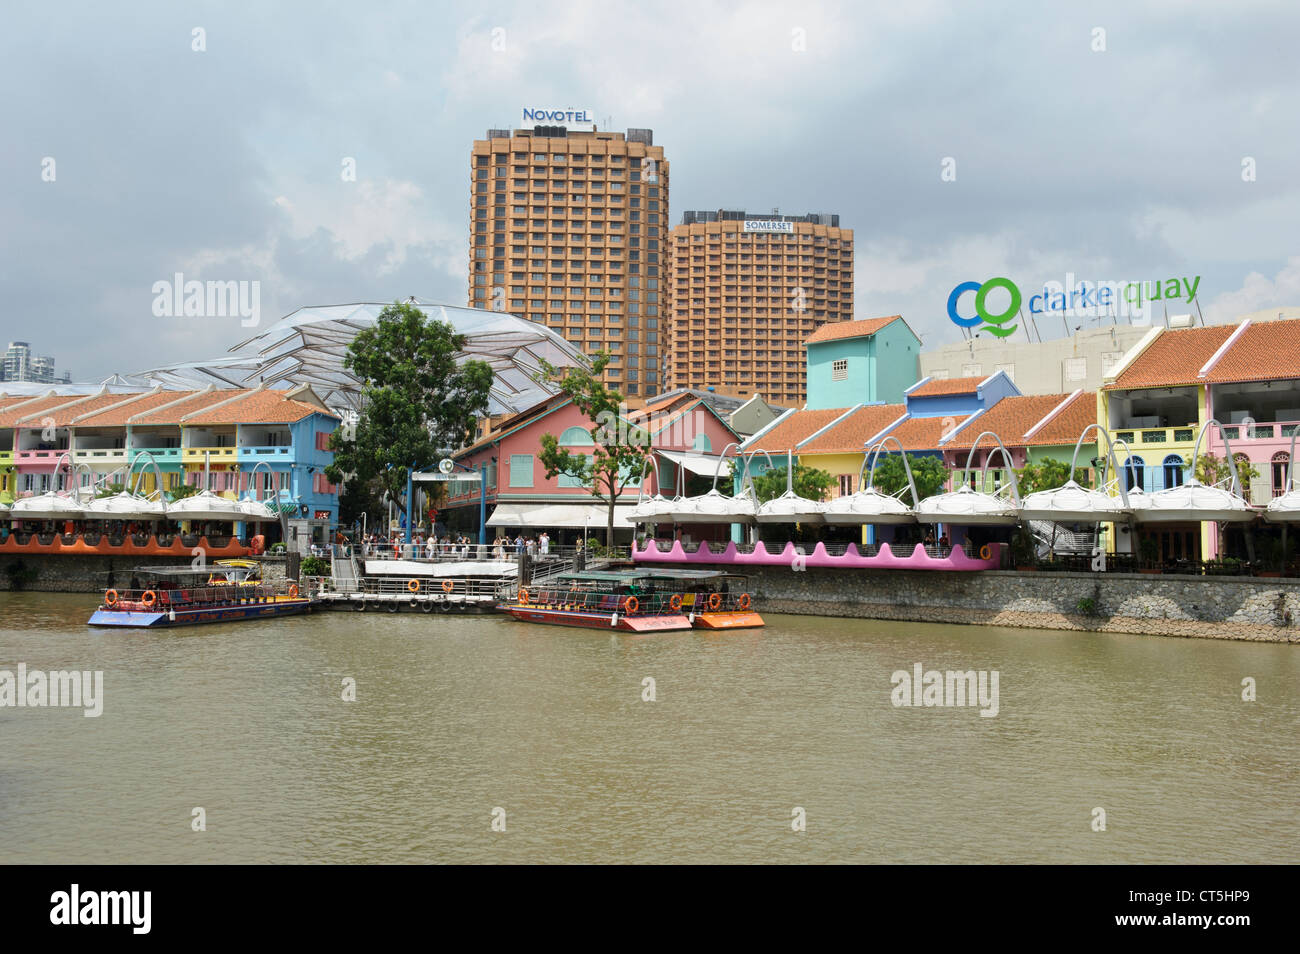 Clarke Quay Pier with restaurants, Singapore, Southeast Asia. Stock Photo